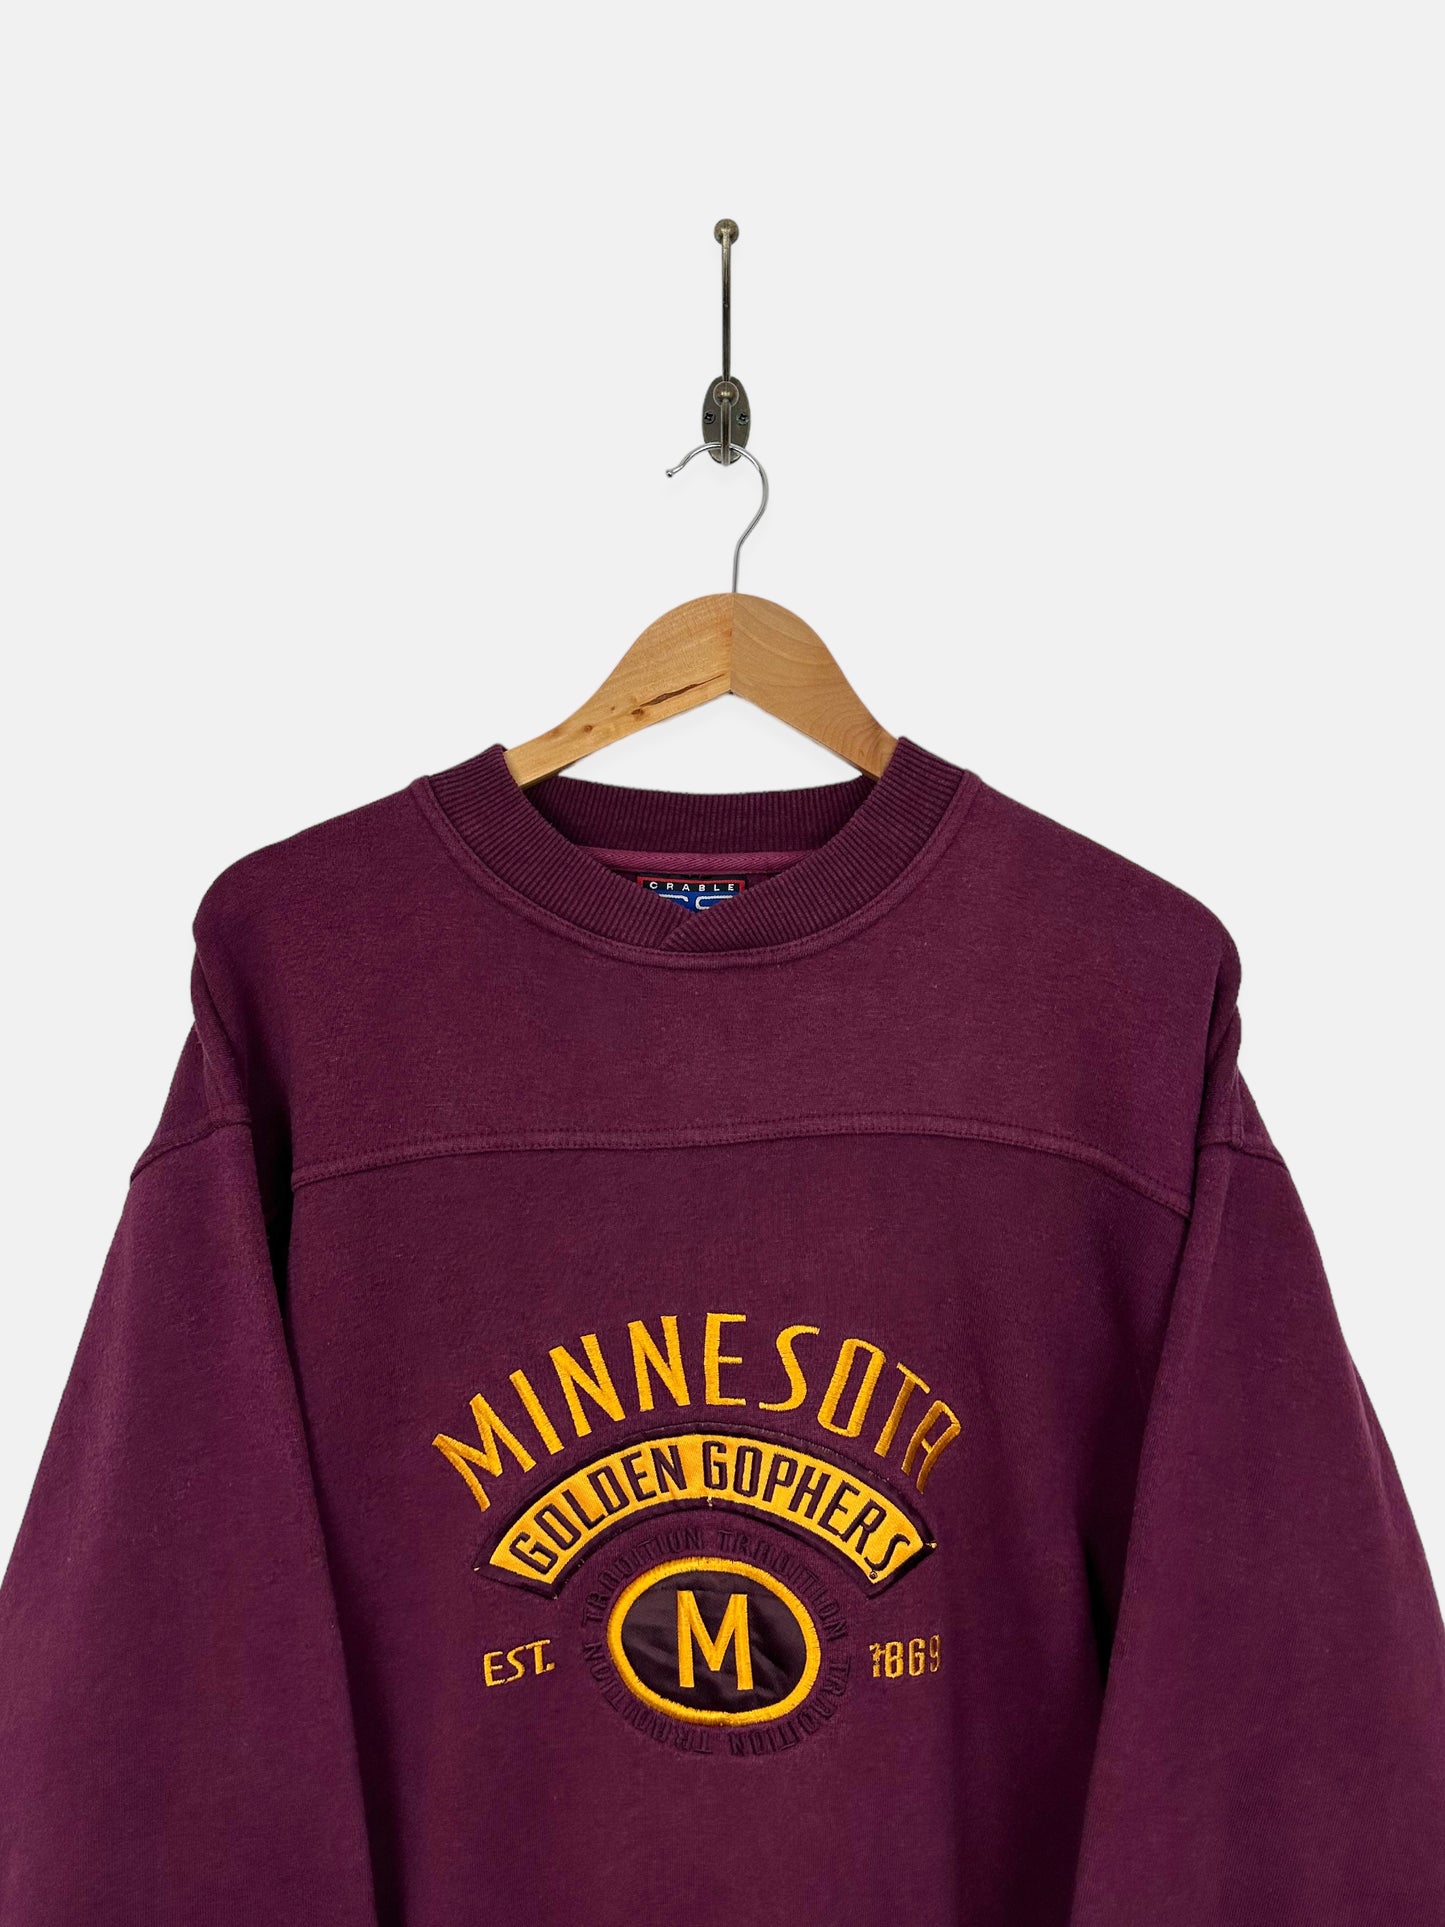 90's Minnesota Golden Gophers Embroidered Vintage Sweatshirt Size S-M